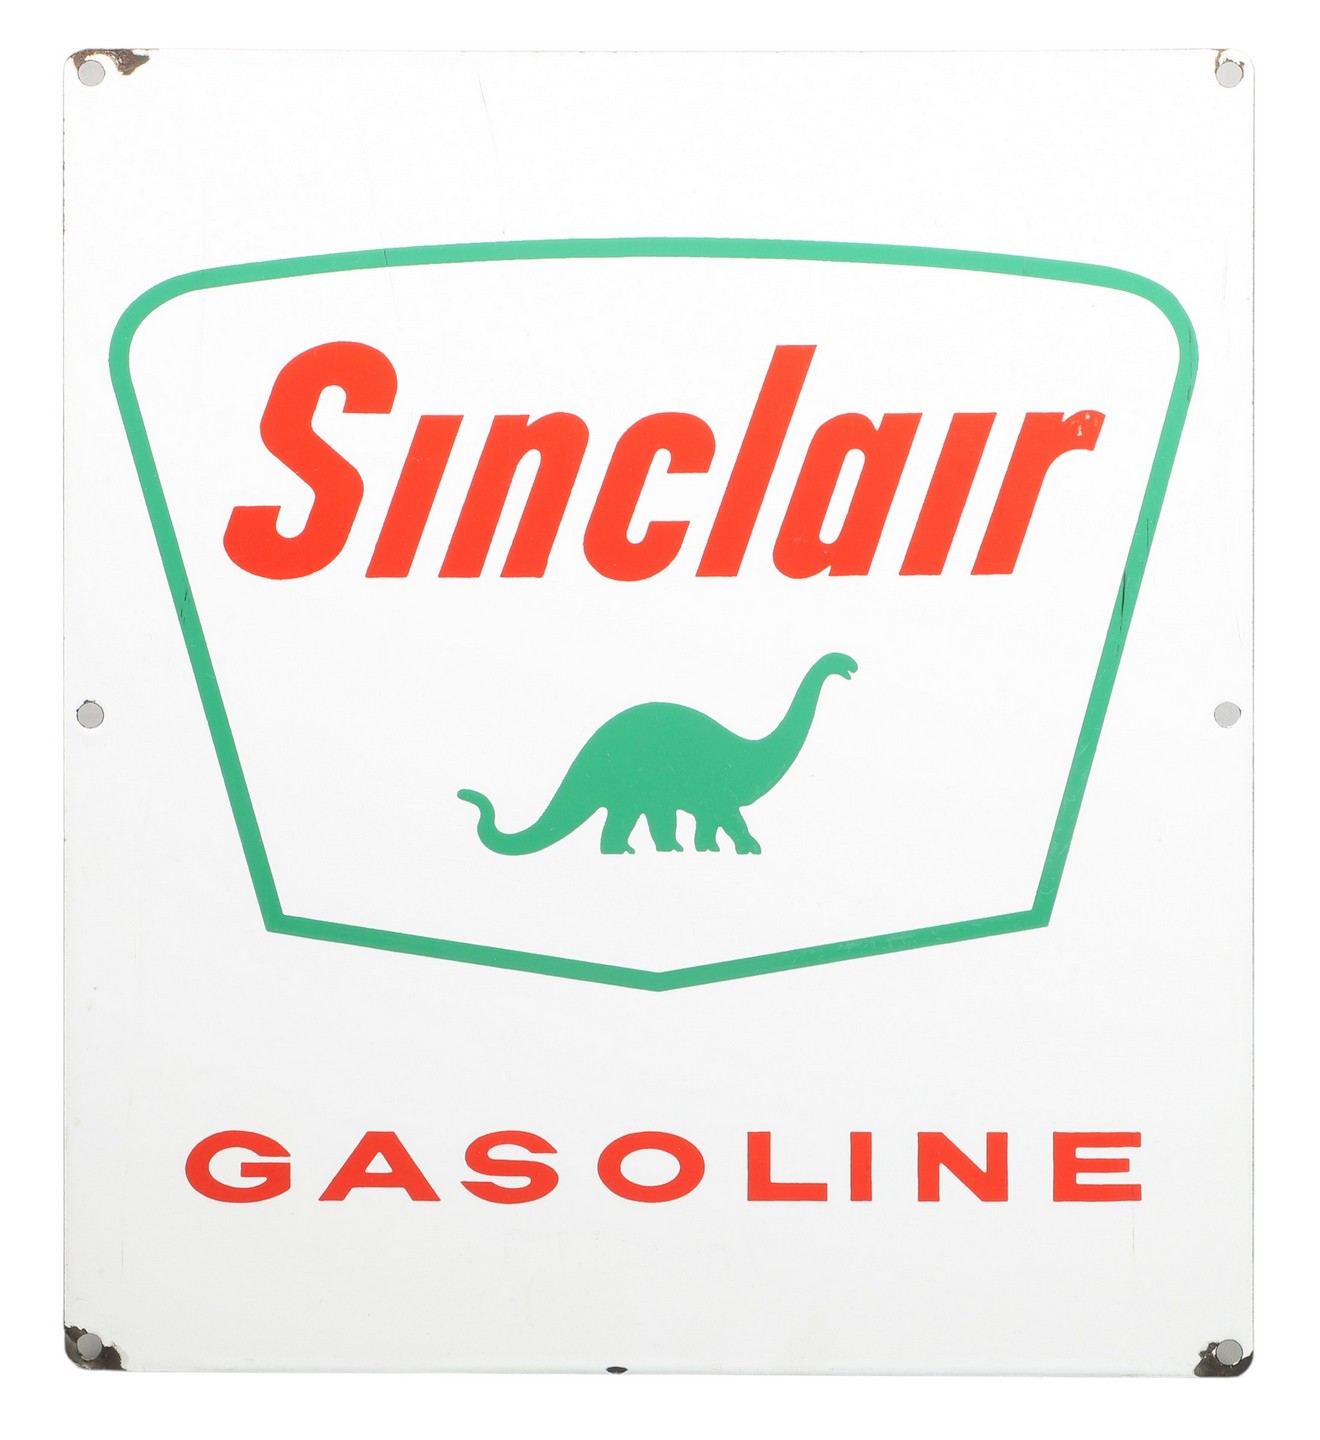 Sinclair Gasoline enameled steel sign,